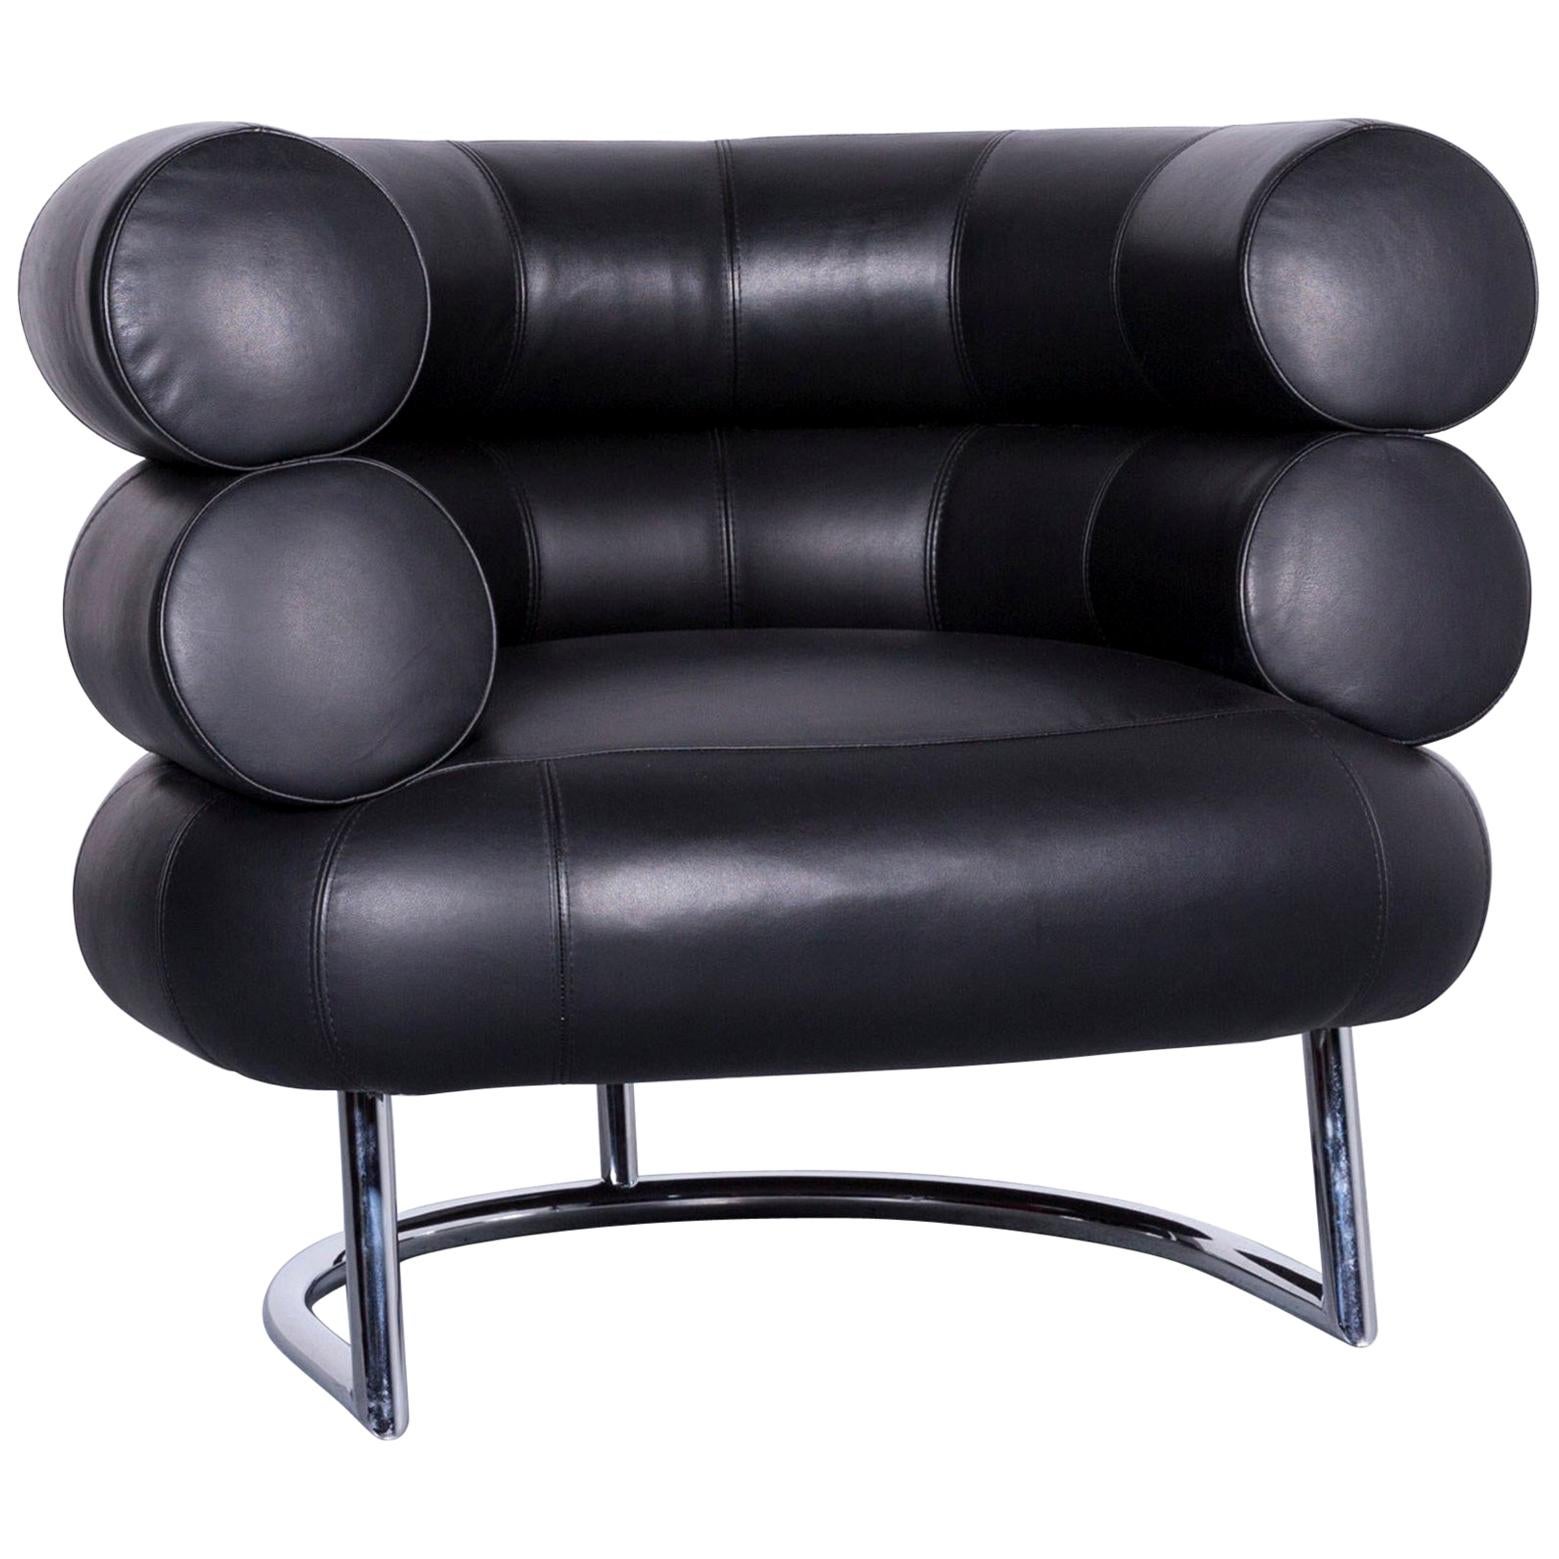 ClassiCon Bibendum Chair Designer Leather Armchair Black For Sale